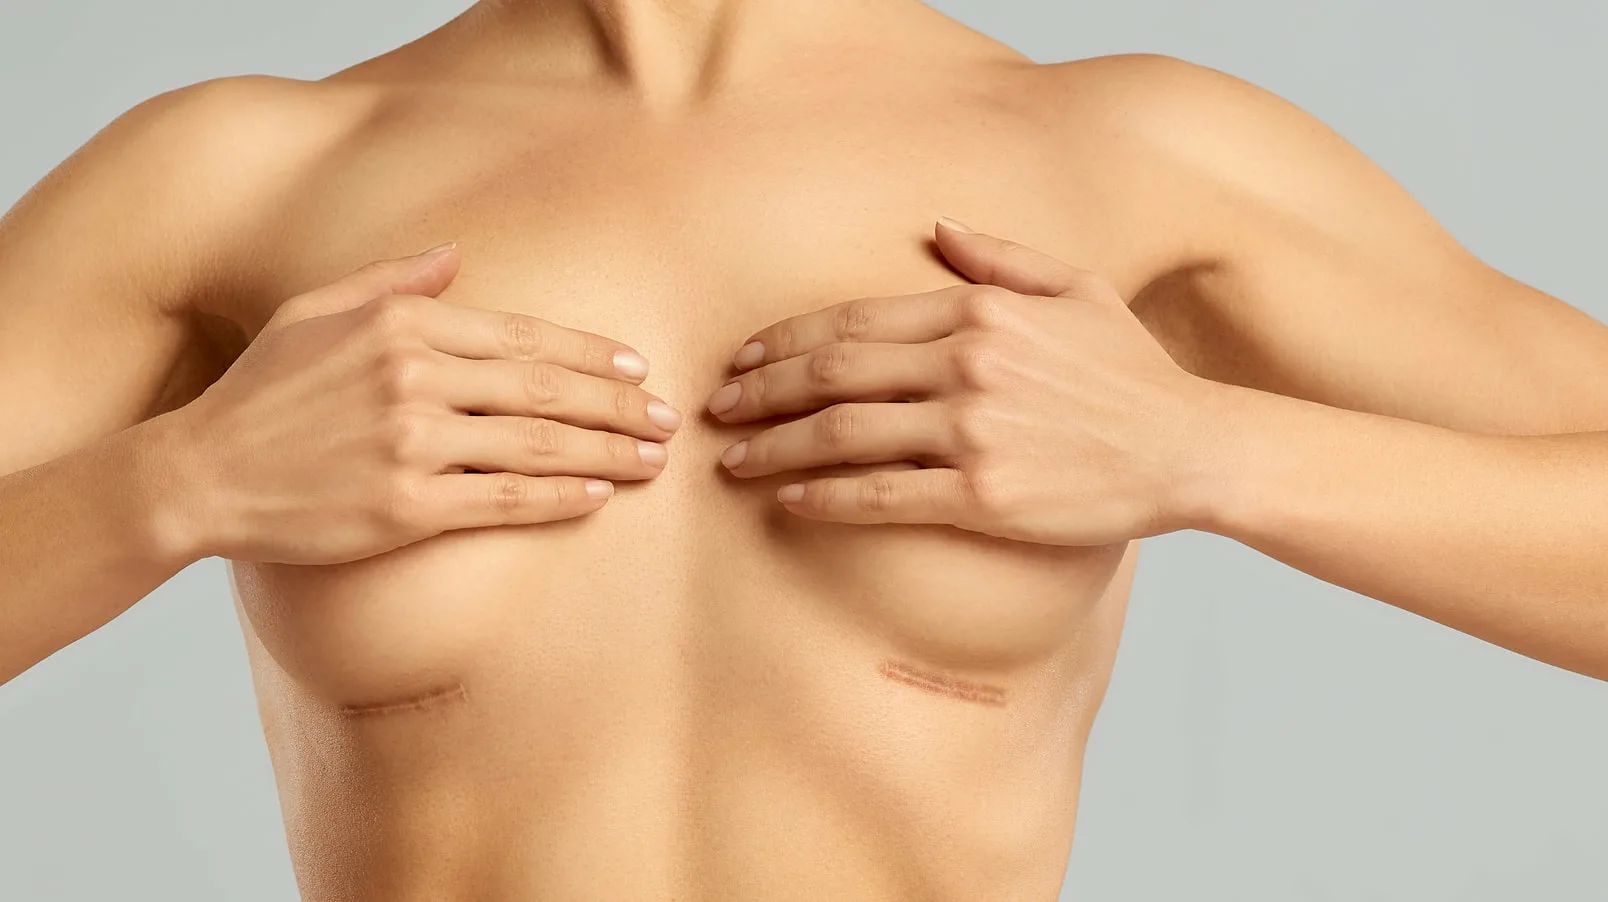 форма груди у мужчин это фото 105